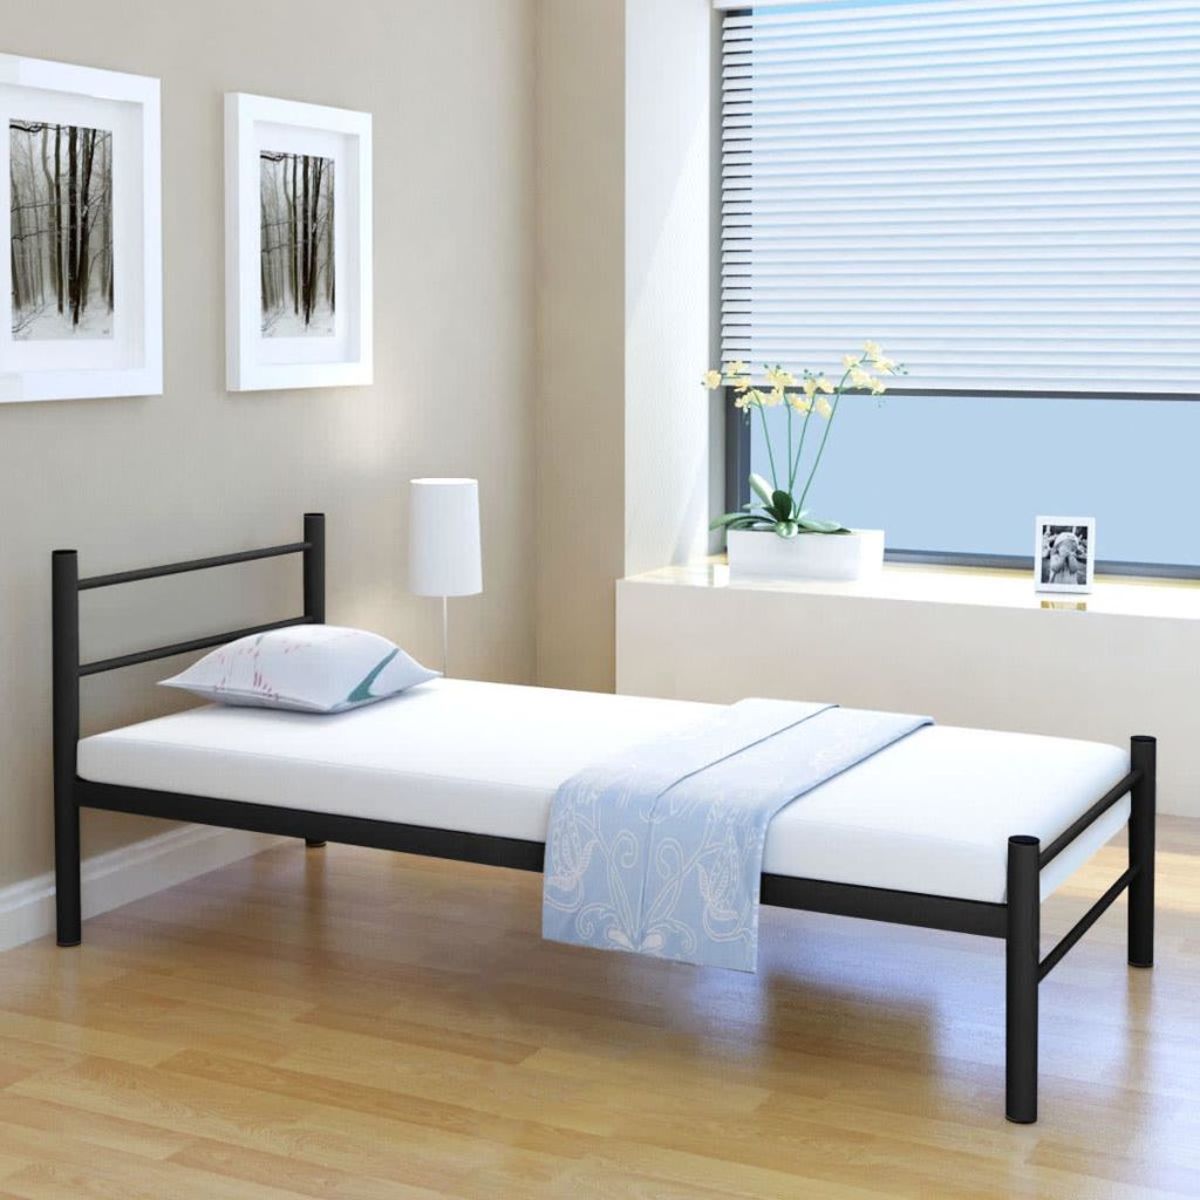 Zwart Metaal met (Incl LW Led klok) 90x200 cm - Bed frame met lattenbodem - bed - 1 persoonsbed - Woonaanraders